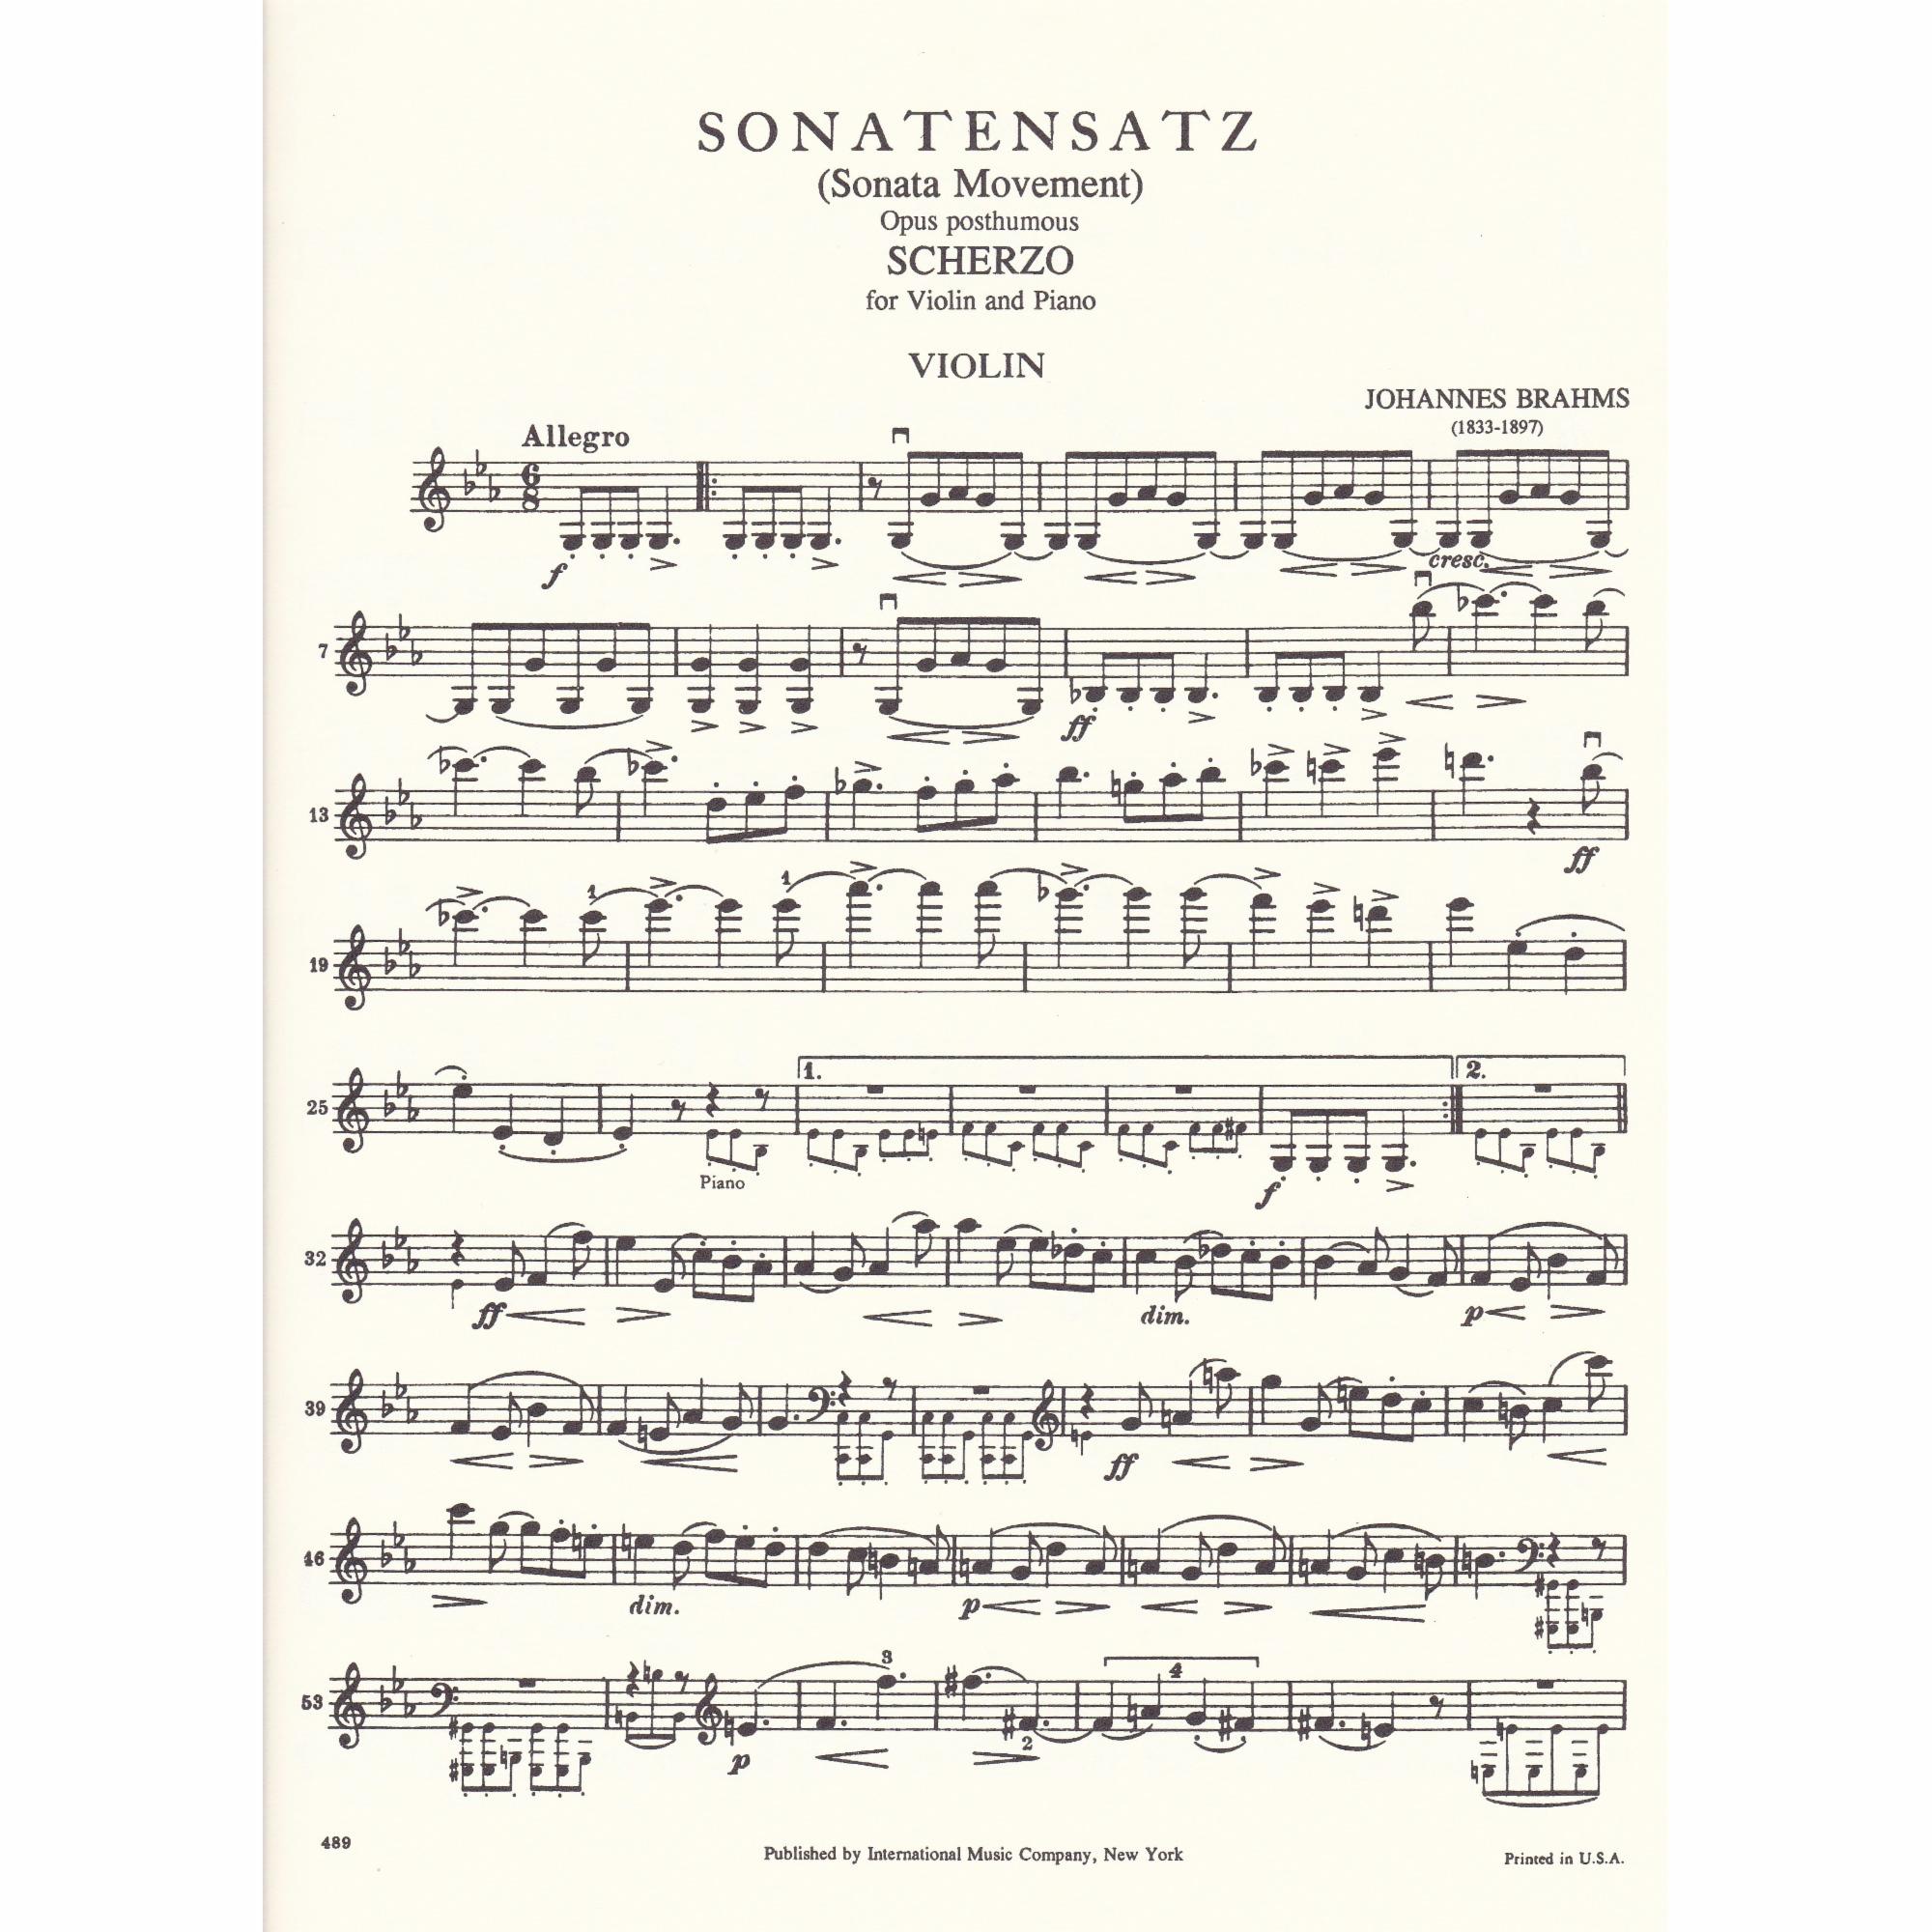 Sonatensatz (Scherzo) for Violin and Piano, Op. Post.